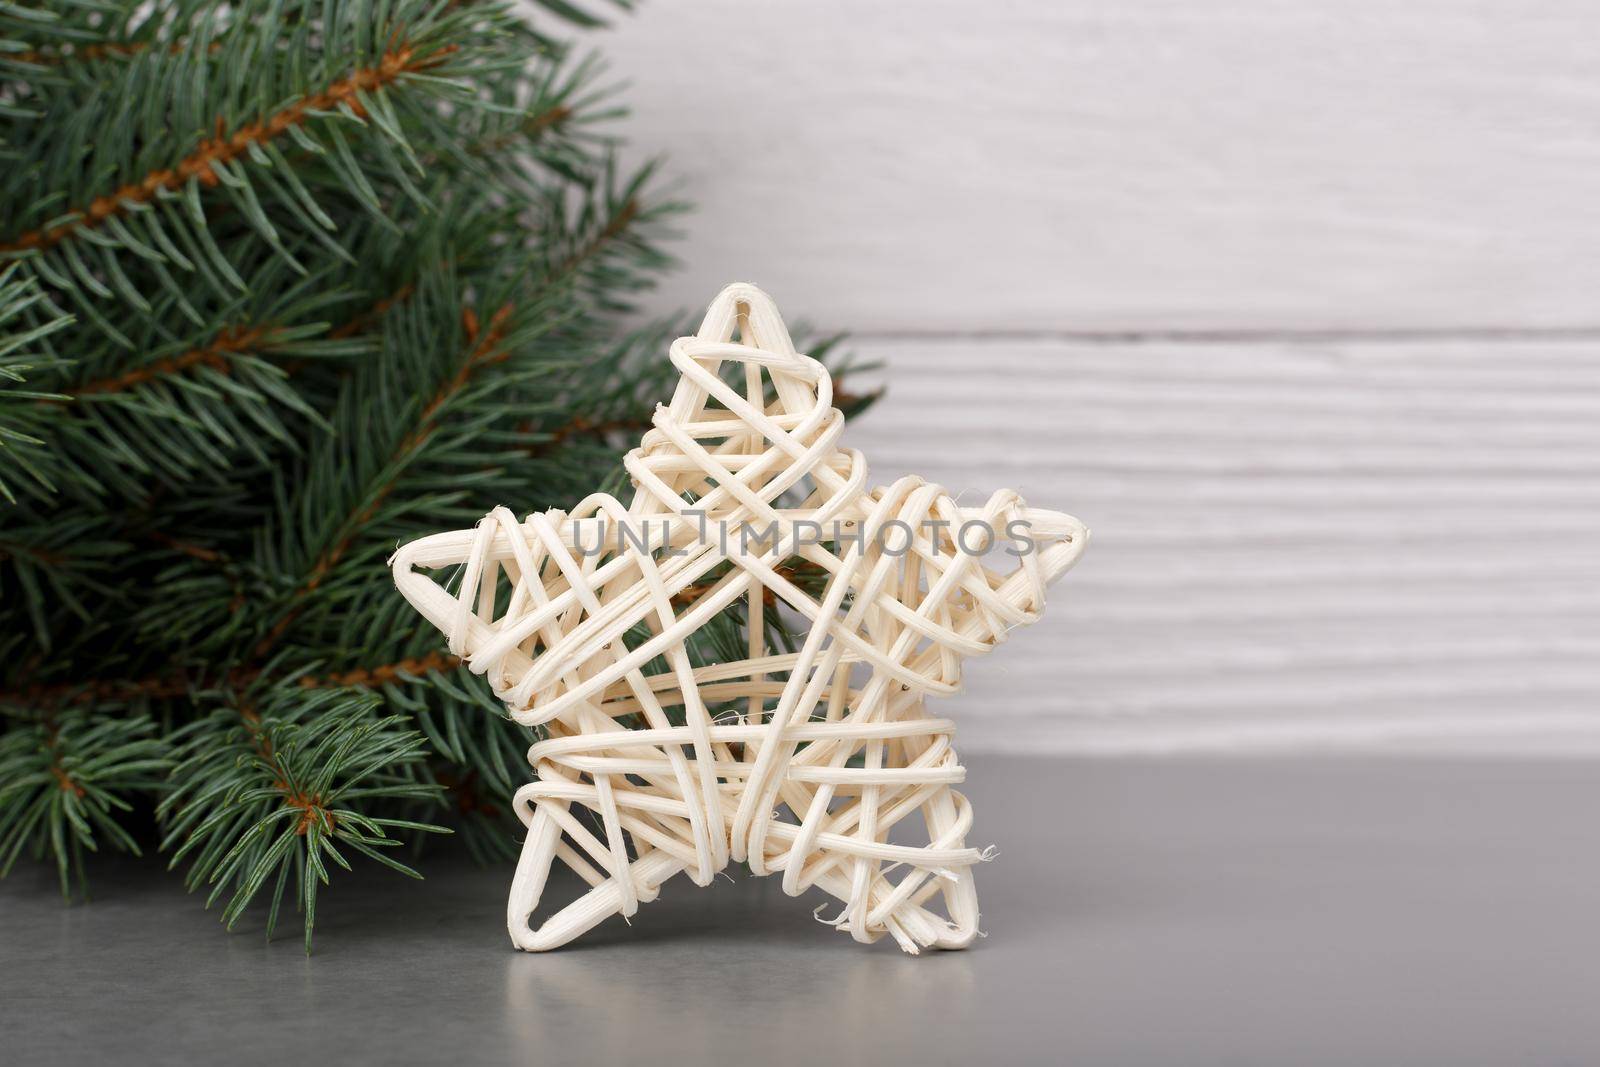 White Christmas star with Christmas tree against white wooden background by Senorina_Irina